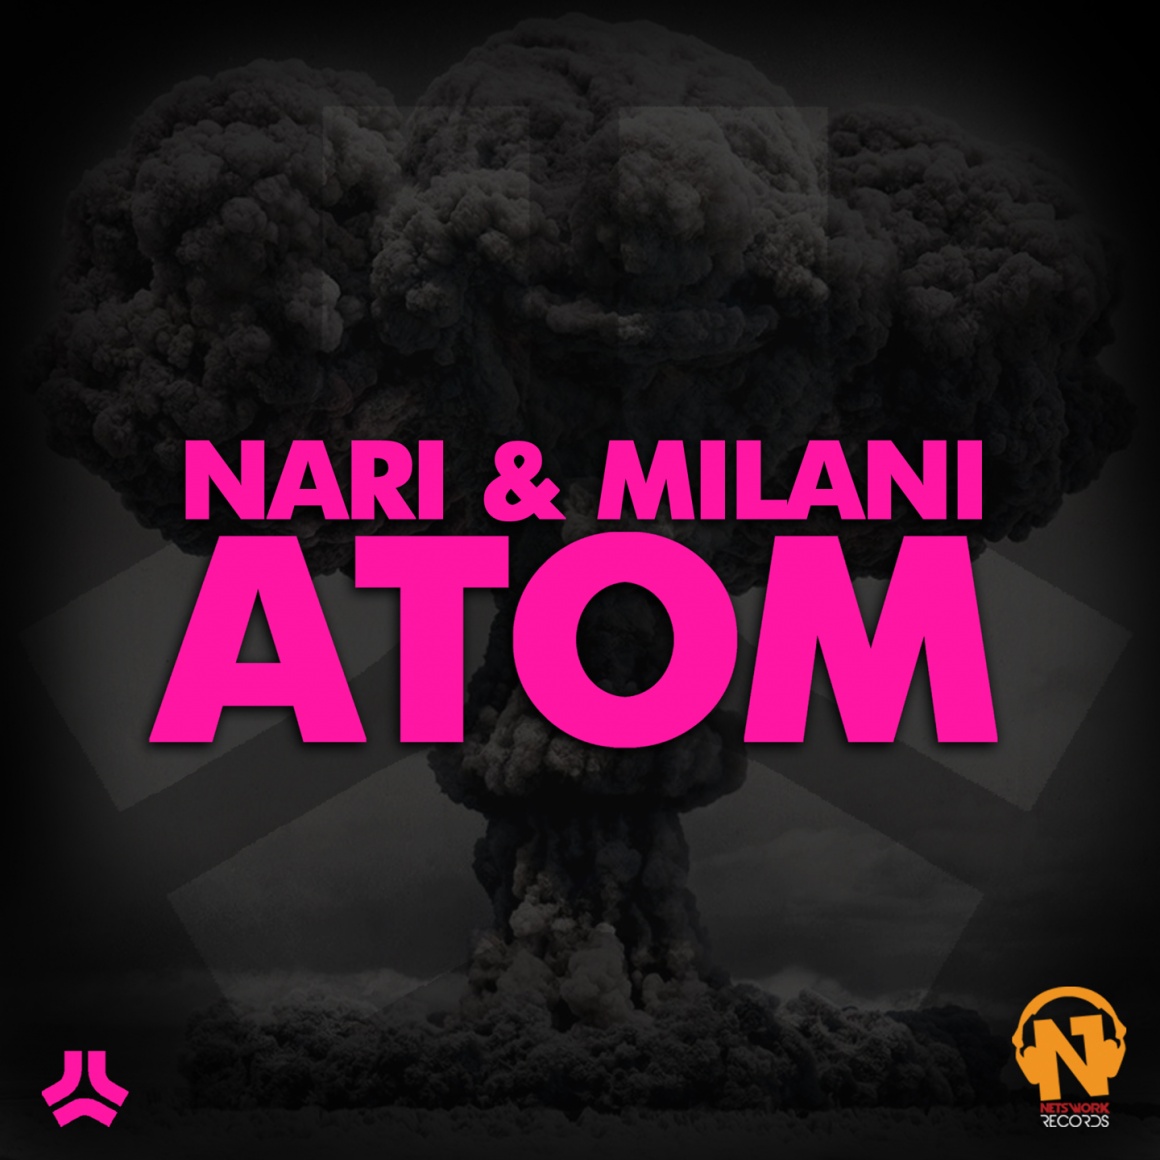 NARI & MILANI “Atom”